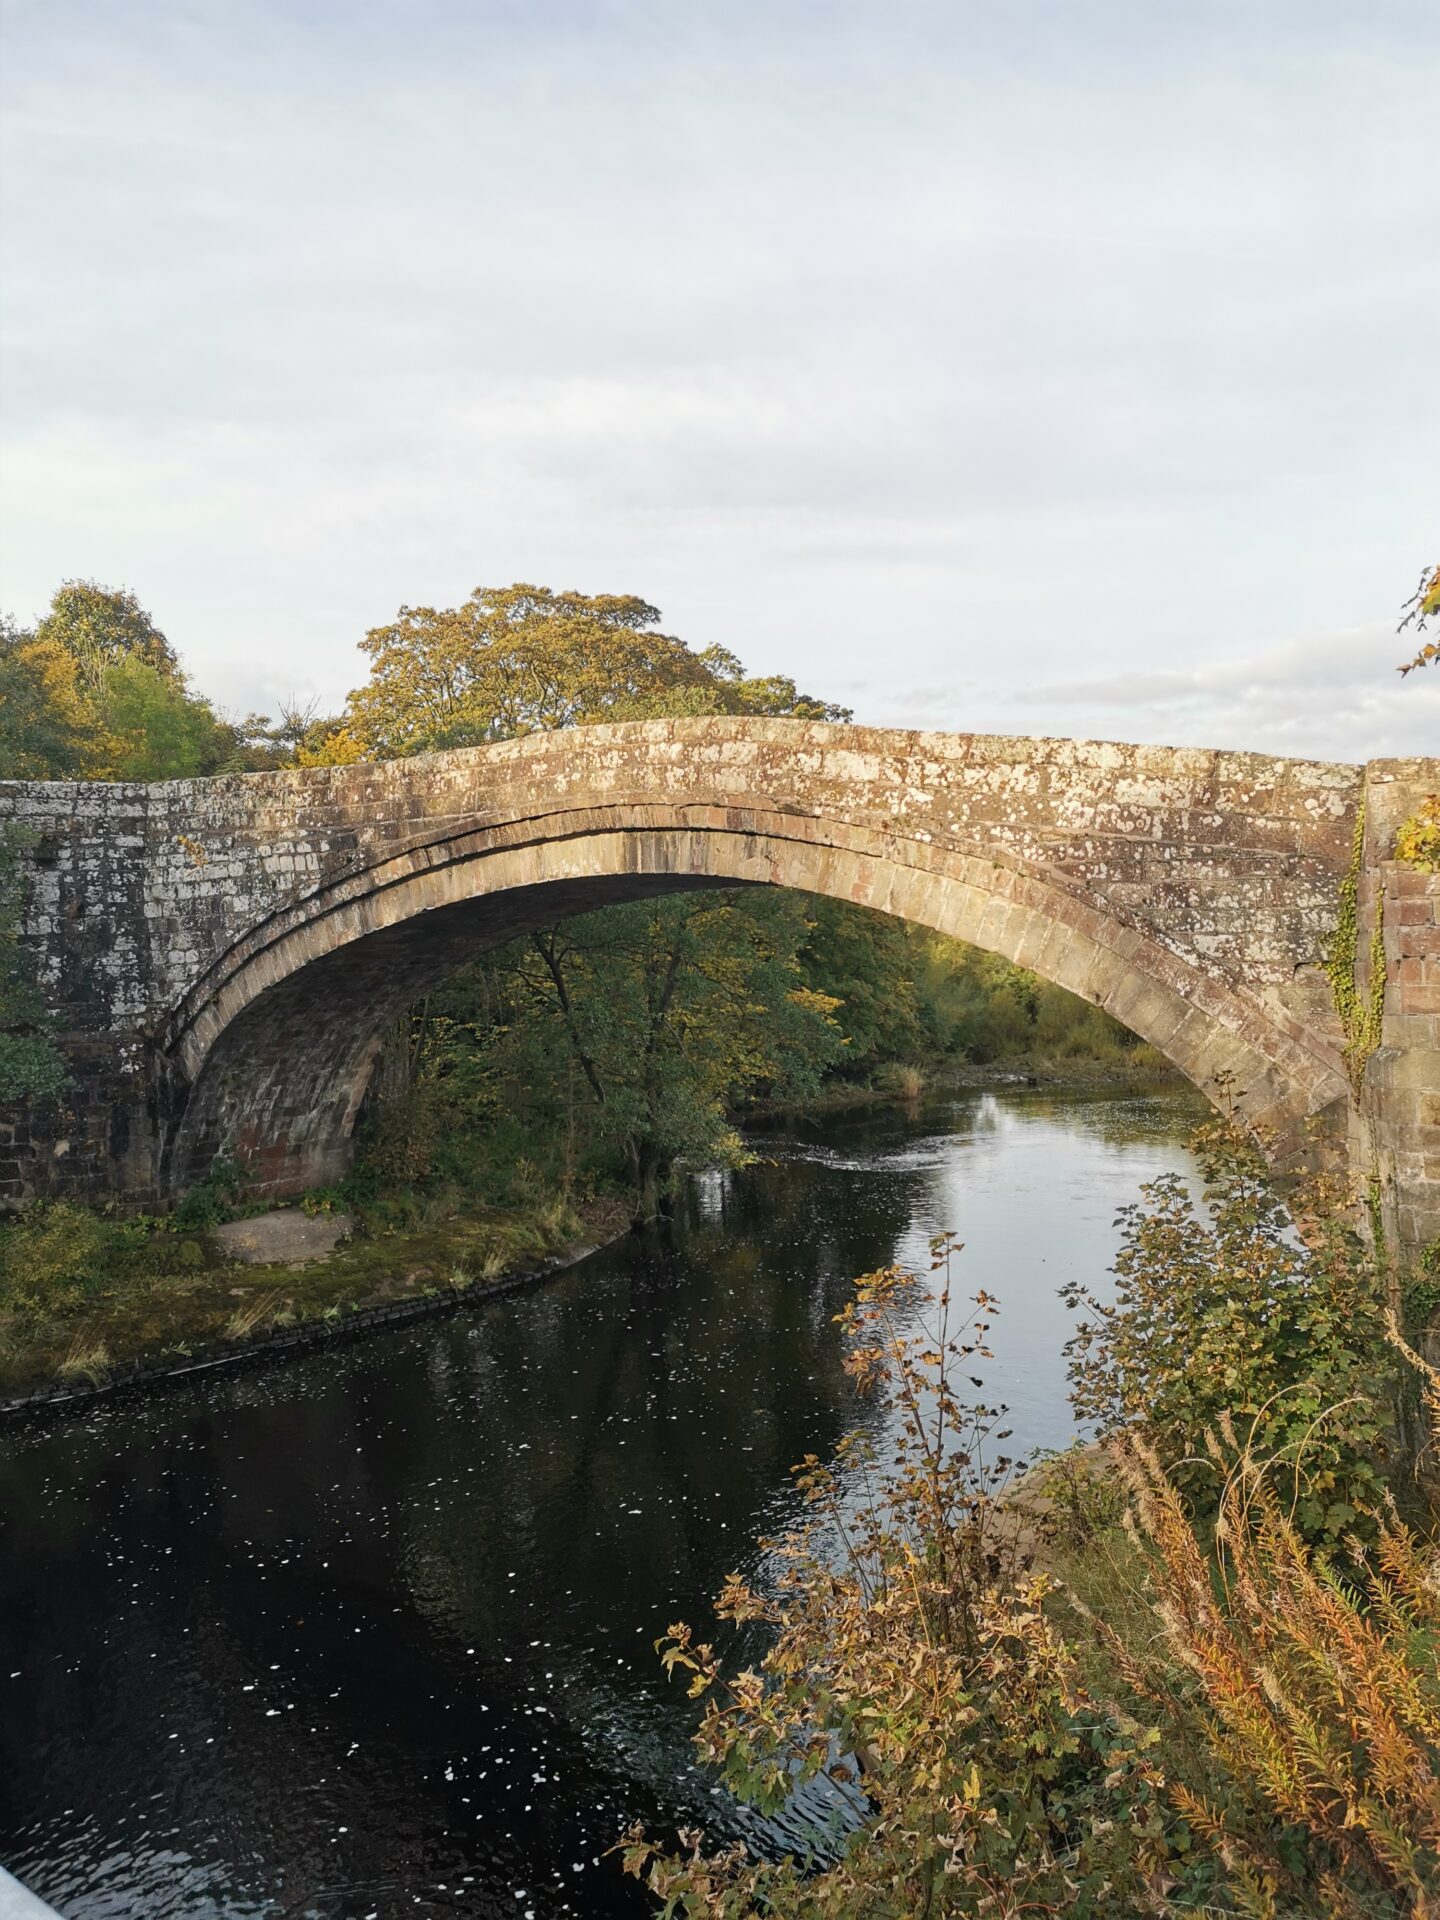 A delicate arched old bridge